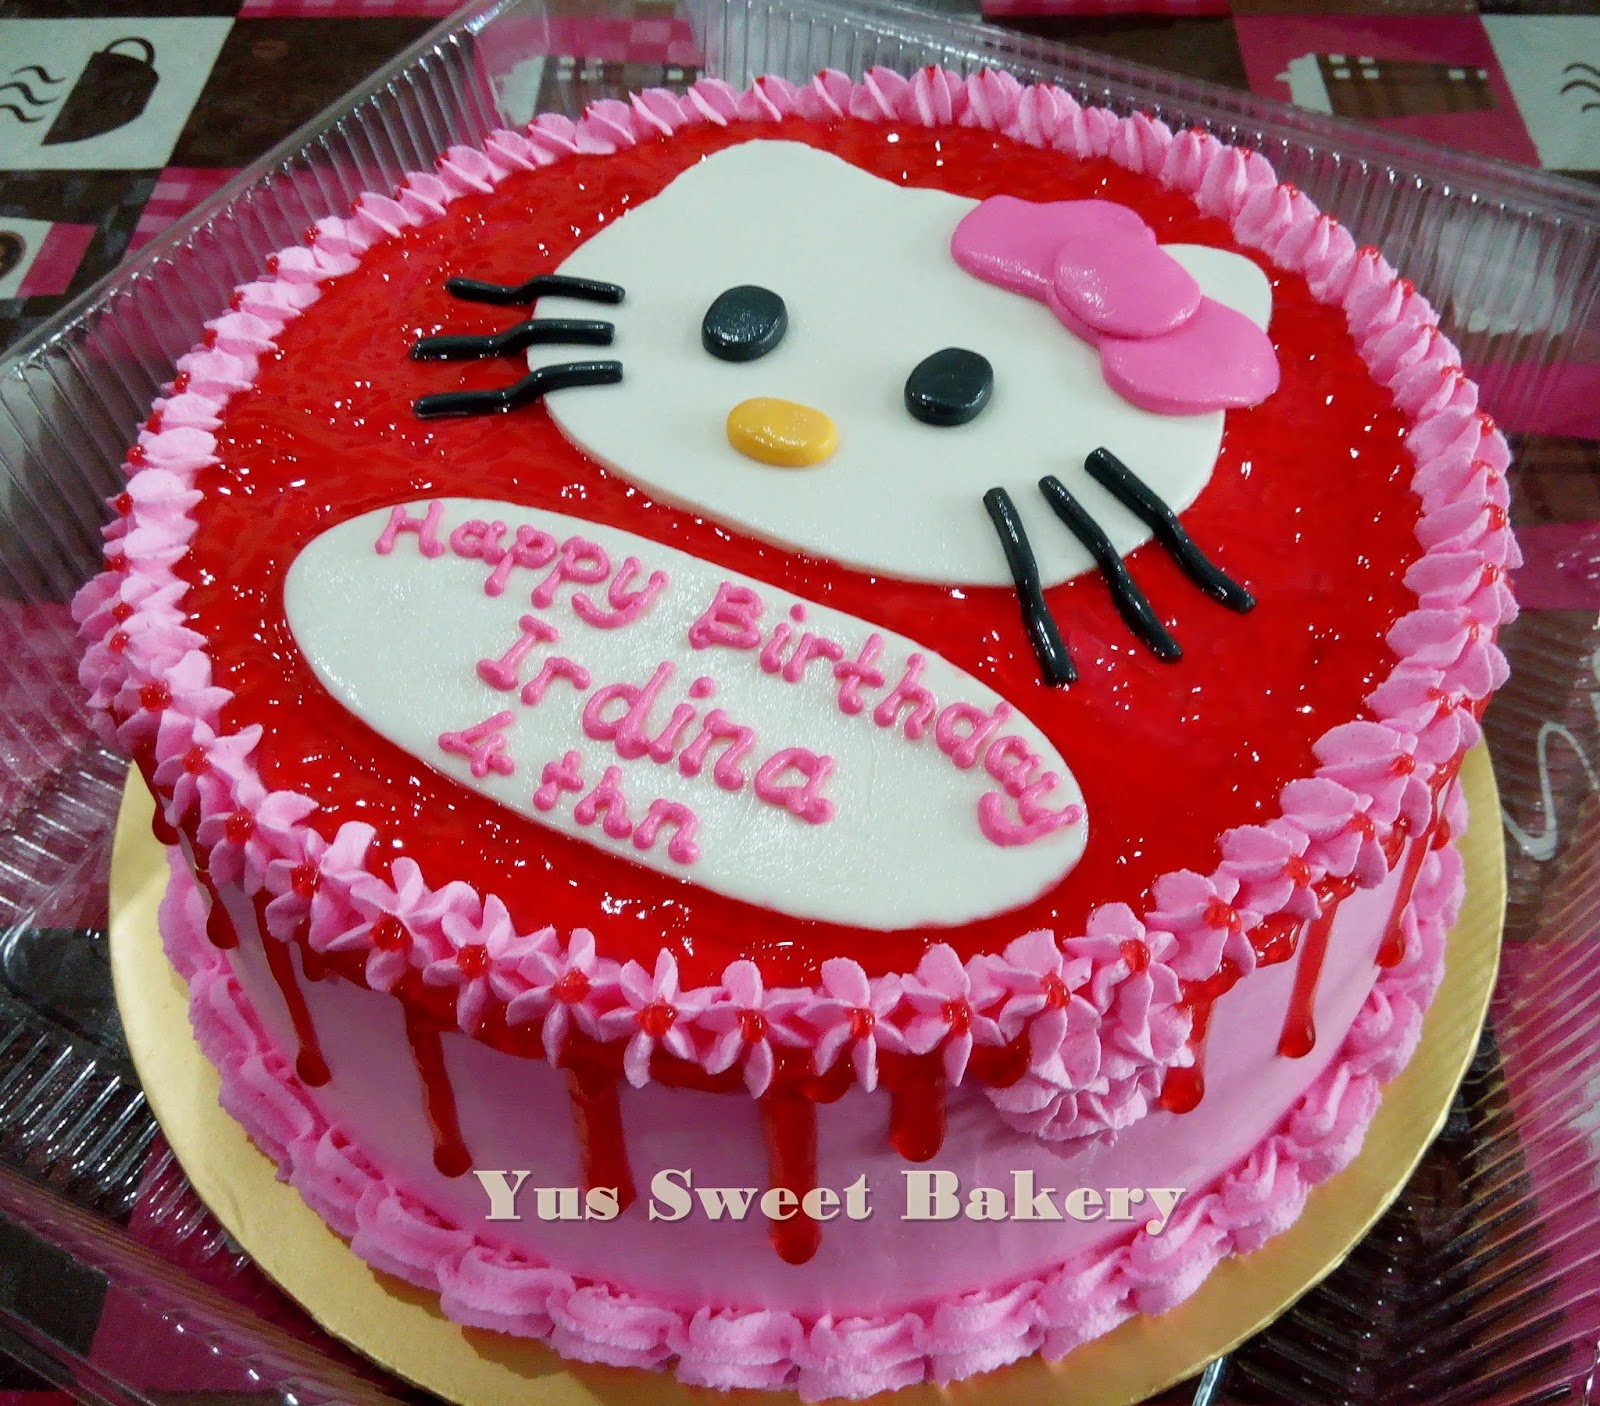 Yus Sweet Bakery: Kek Strawberry dengan tema Hello Kitty